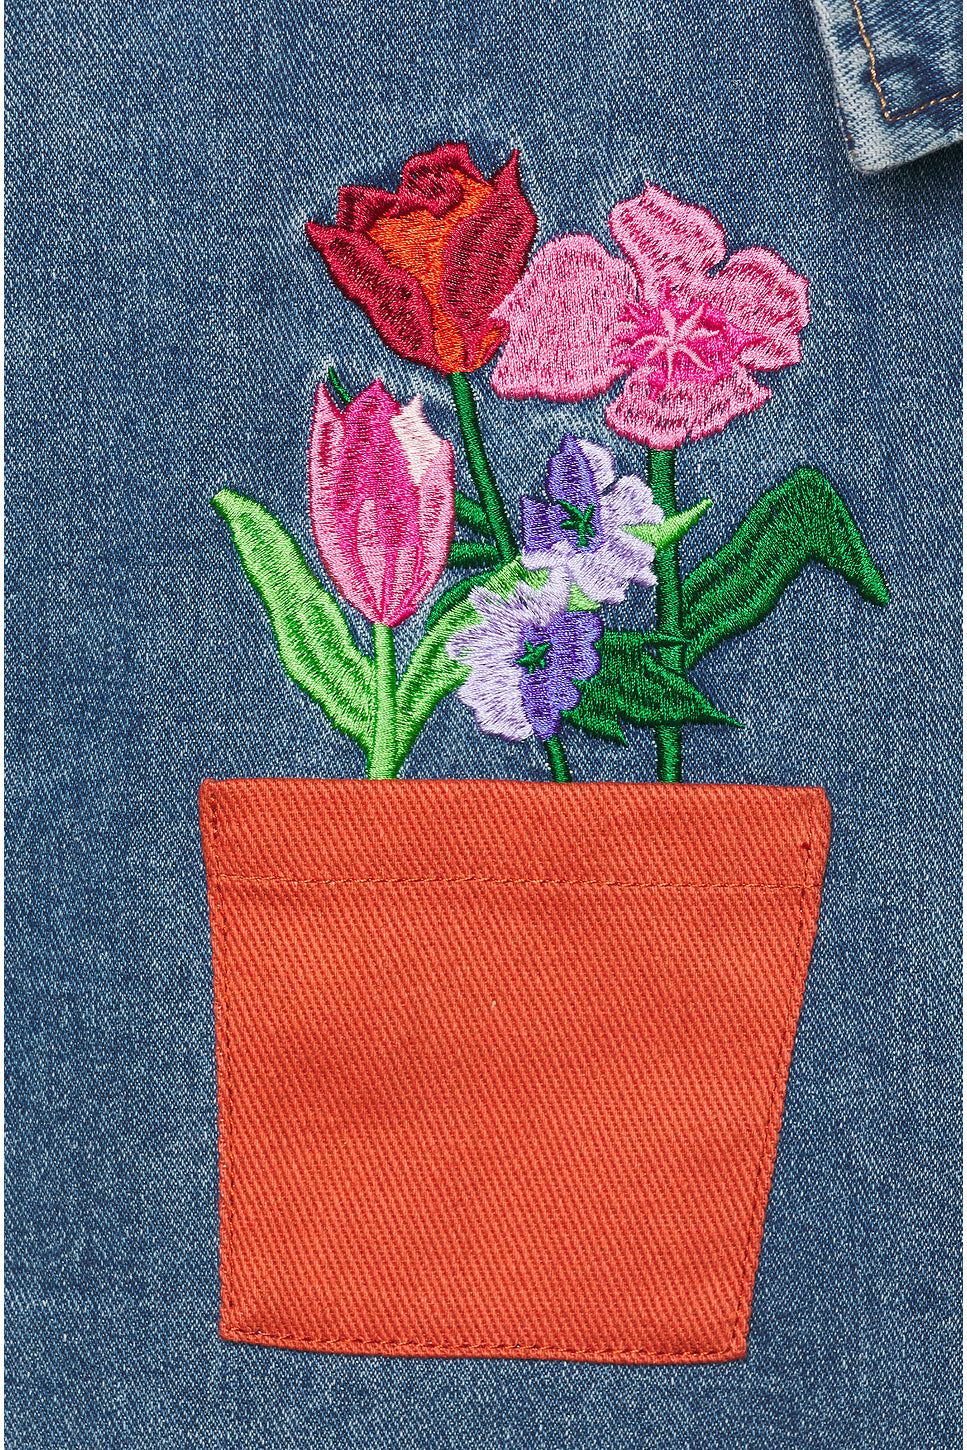 Flower Pots Denim Jacket